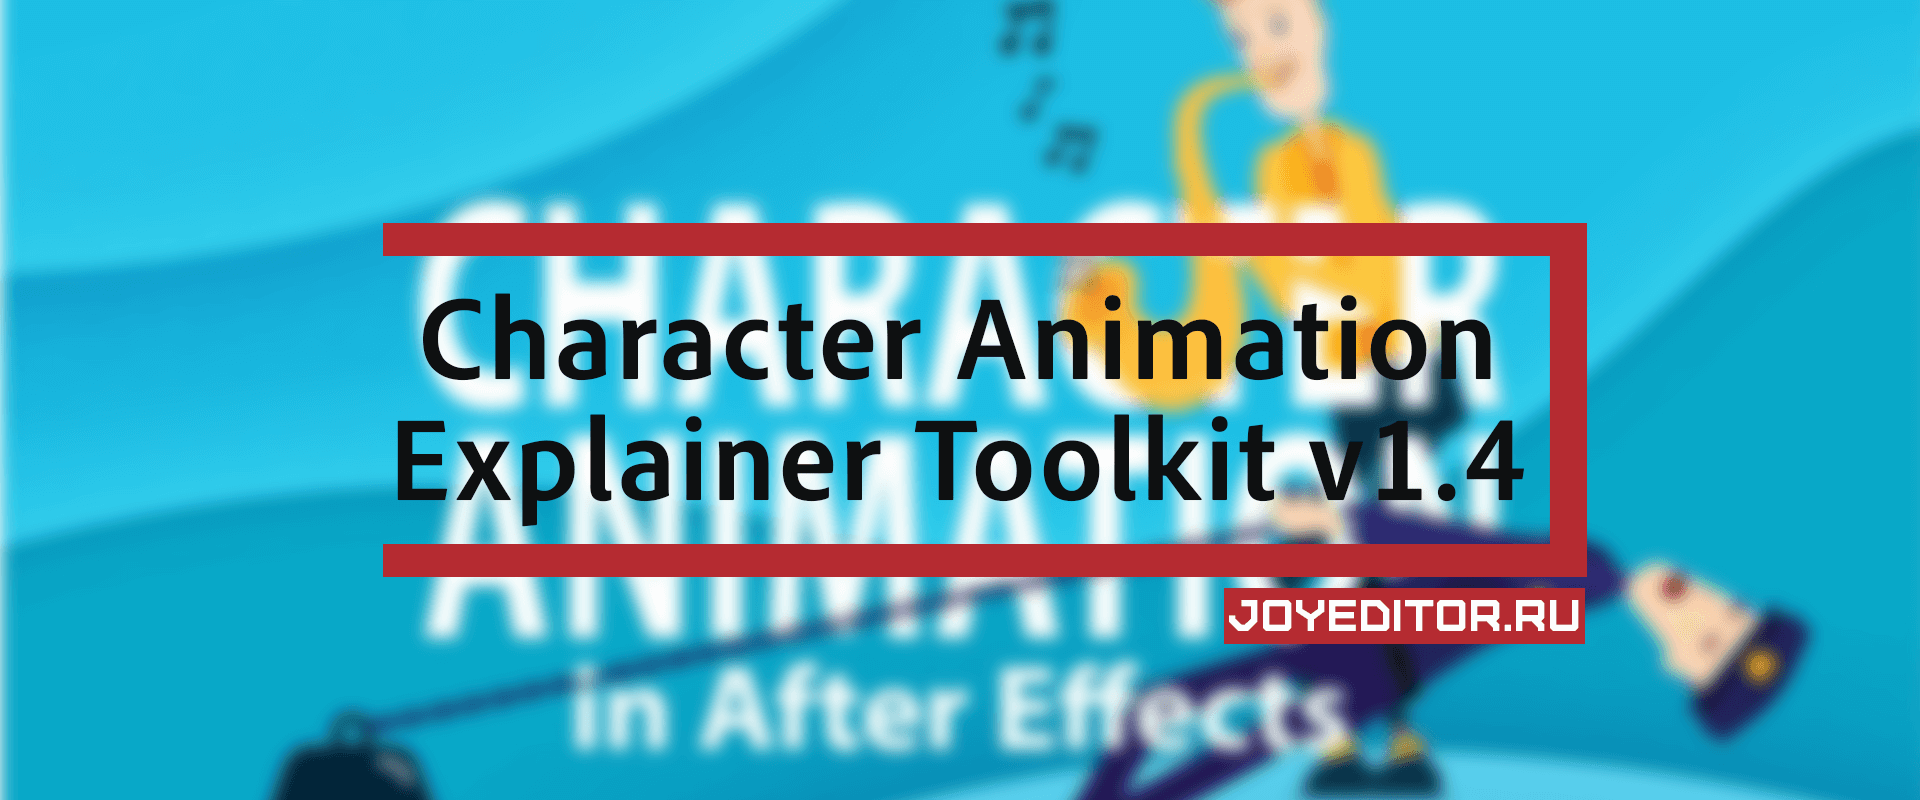 Character Animation Explainer Toolkit v1.4